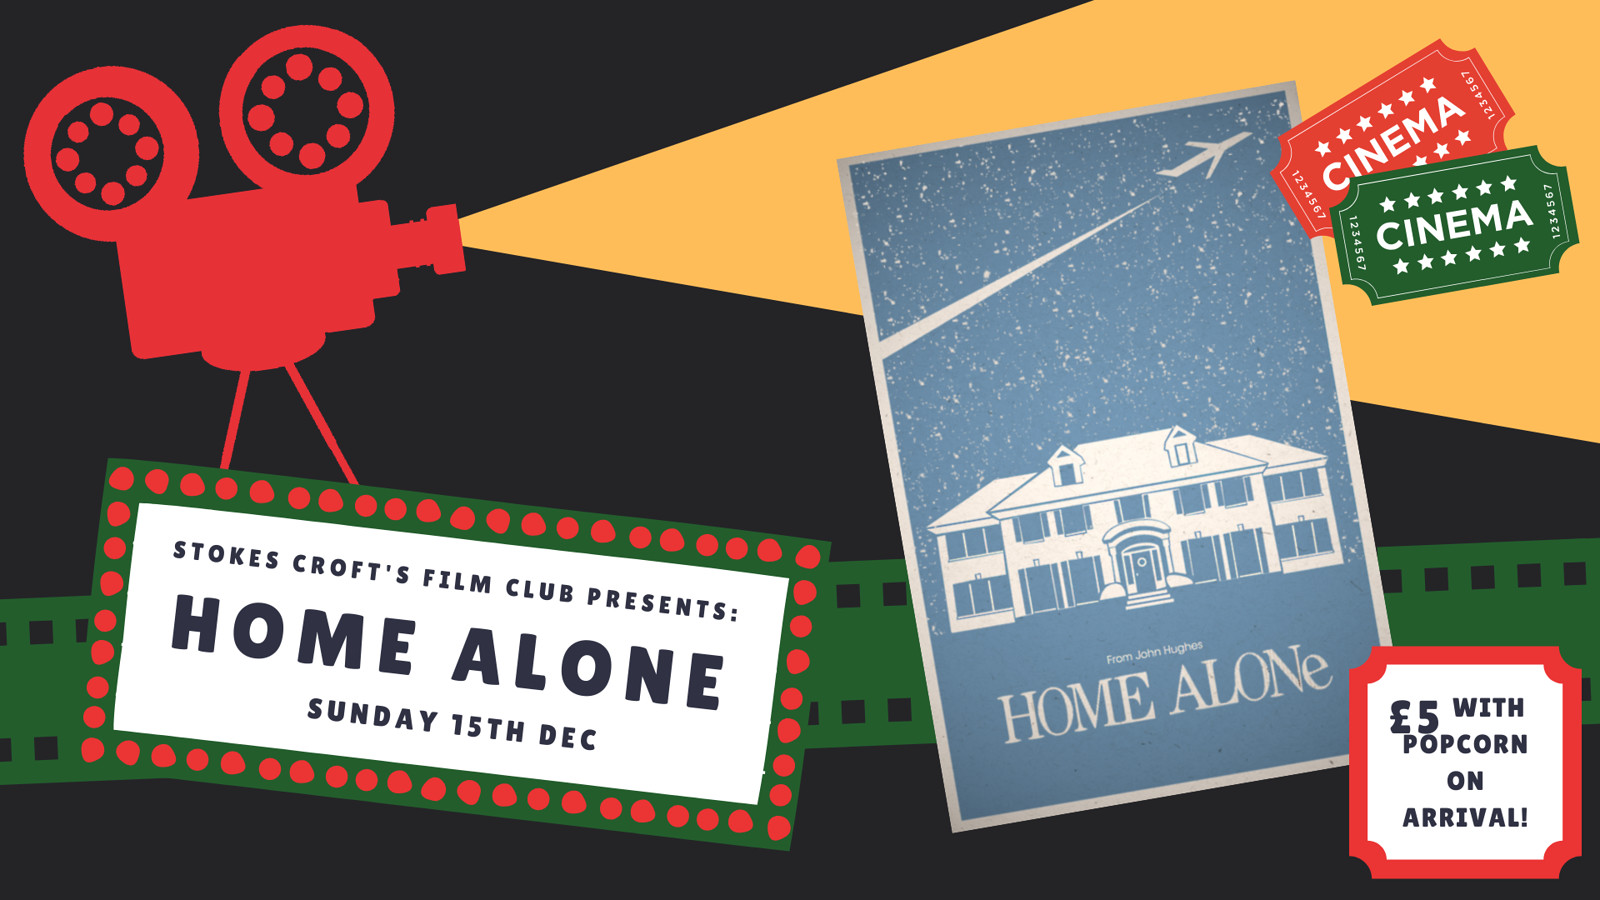 Home Alone Film Screening at Stokes Croft Beer Garden